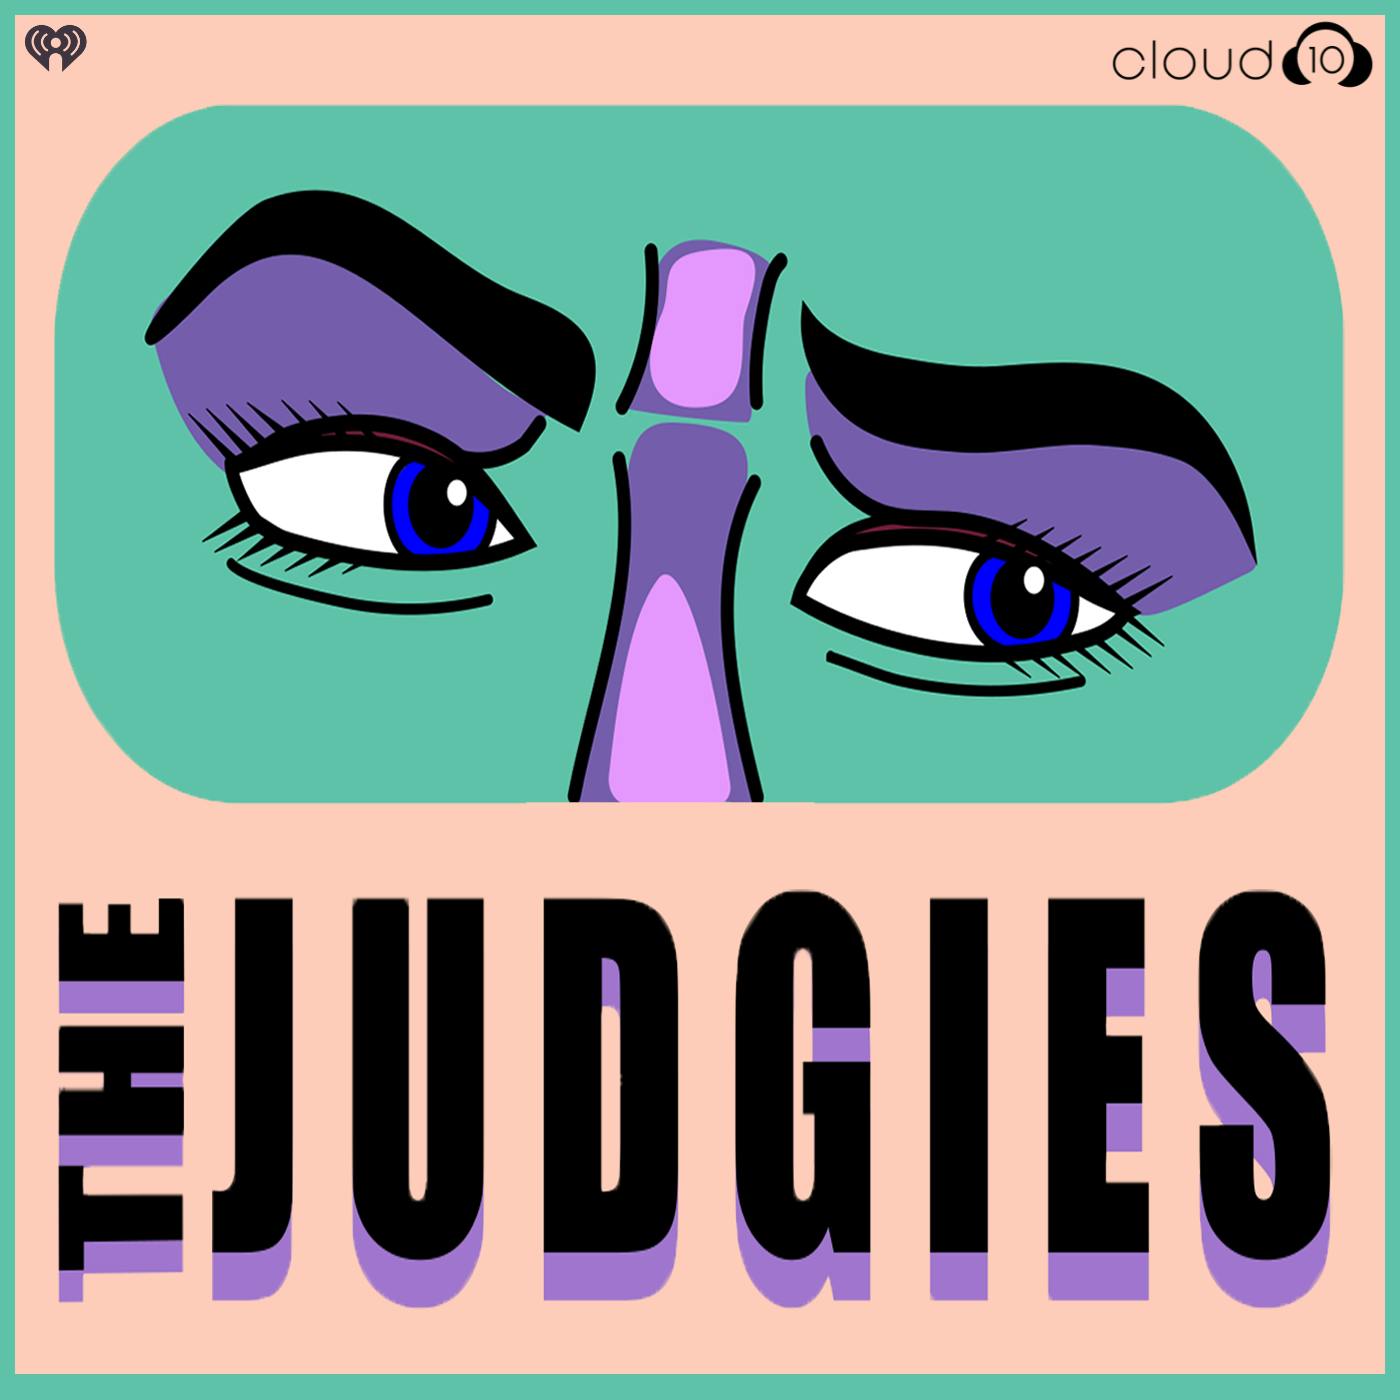 Introducing: The Judgies